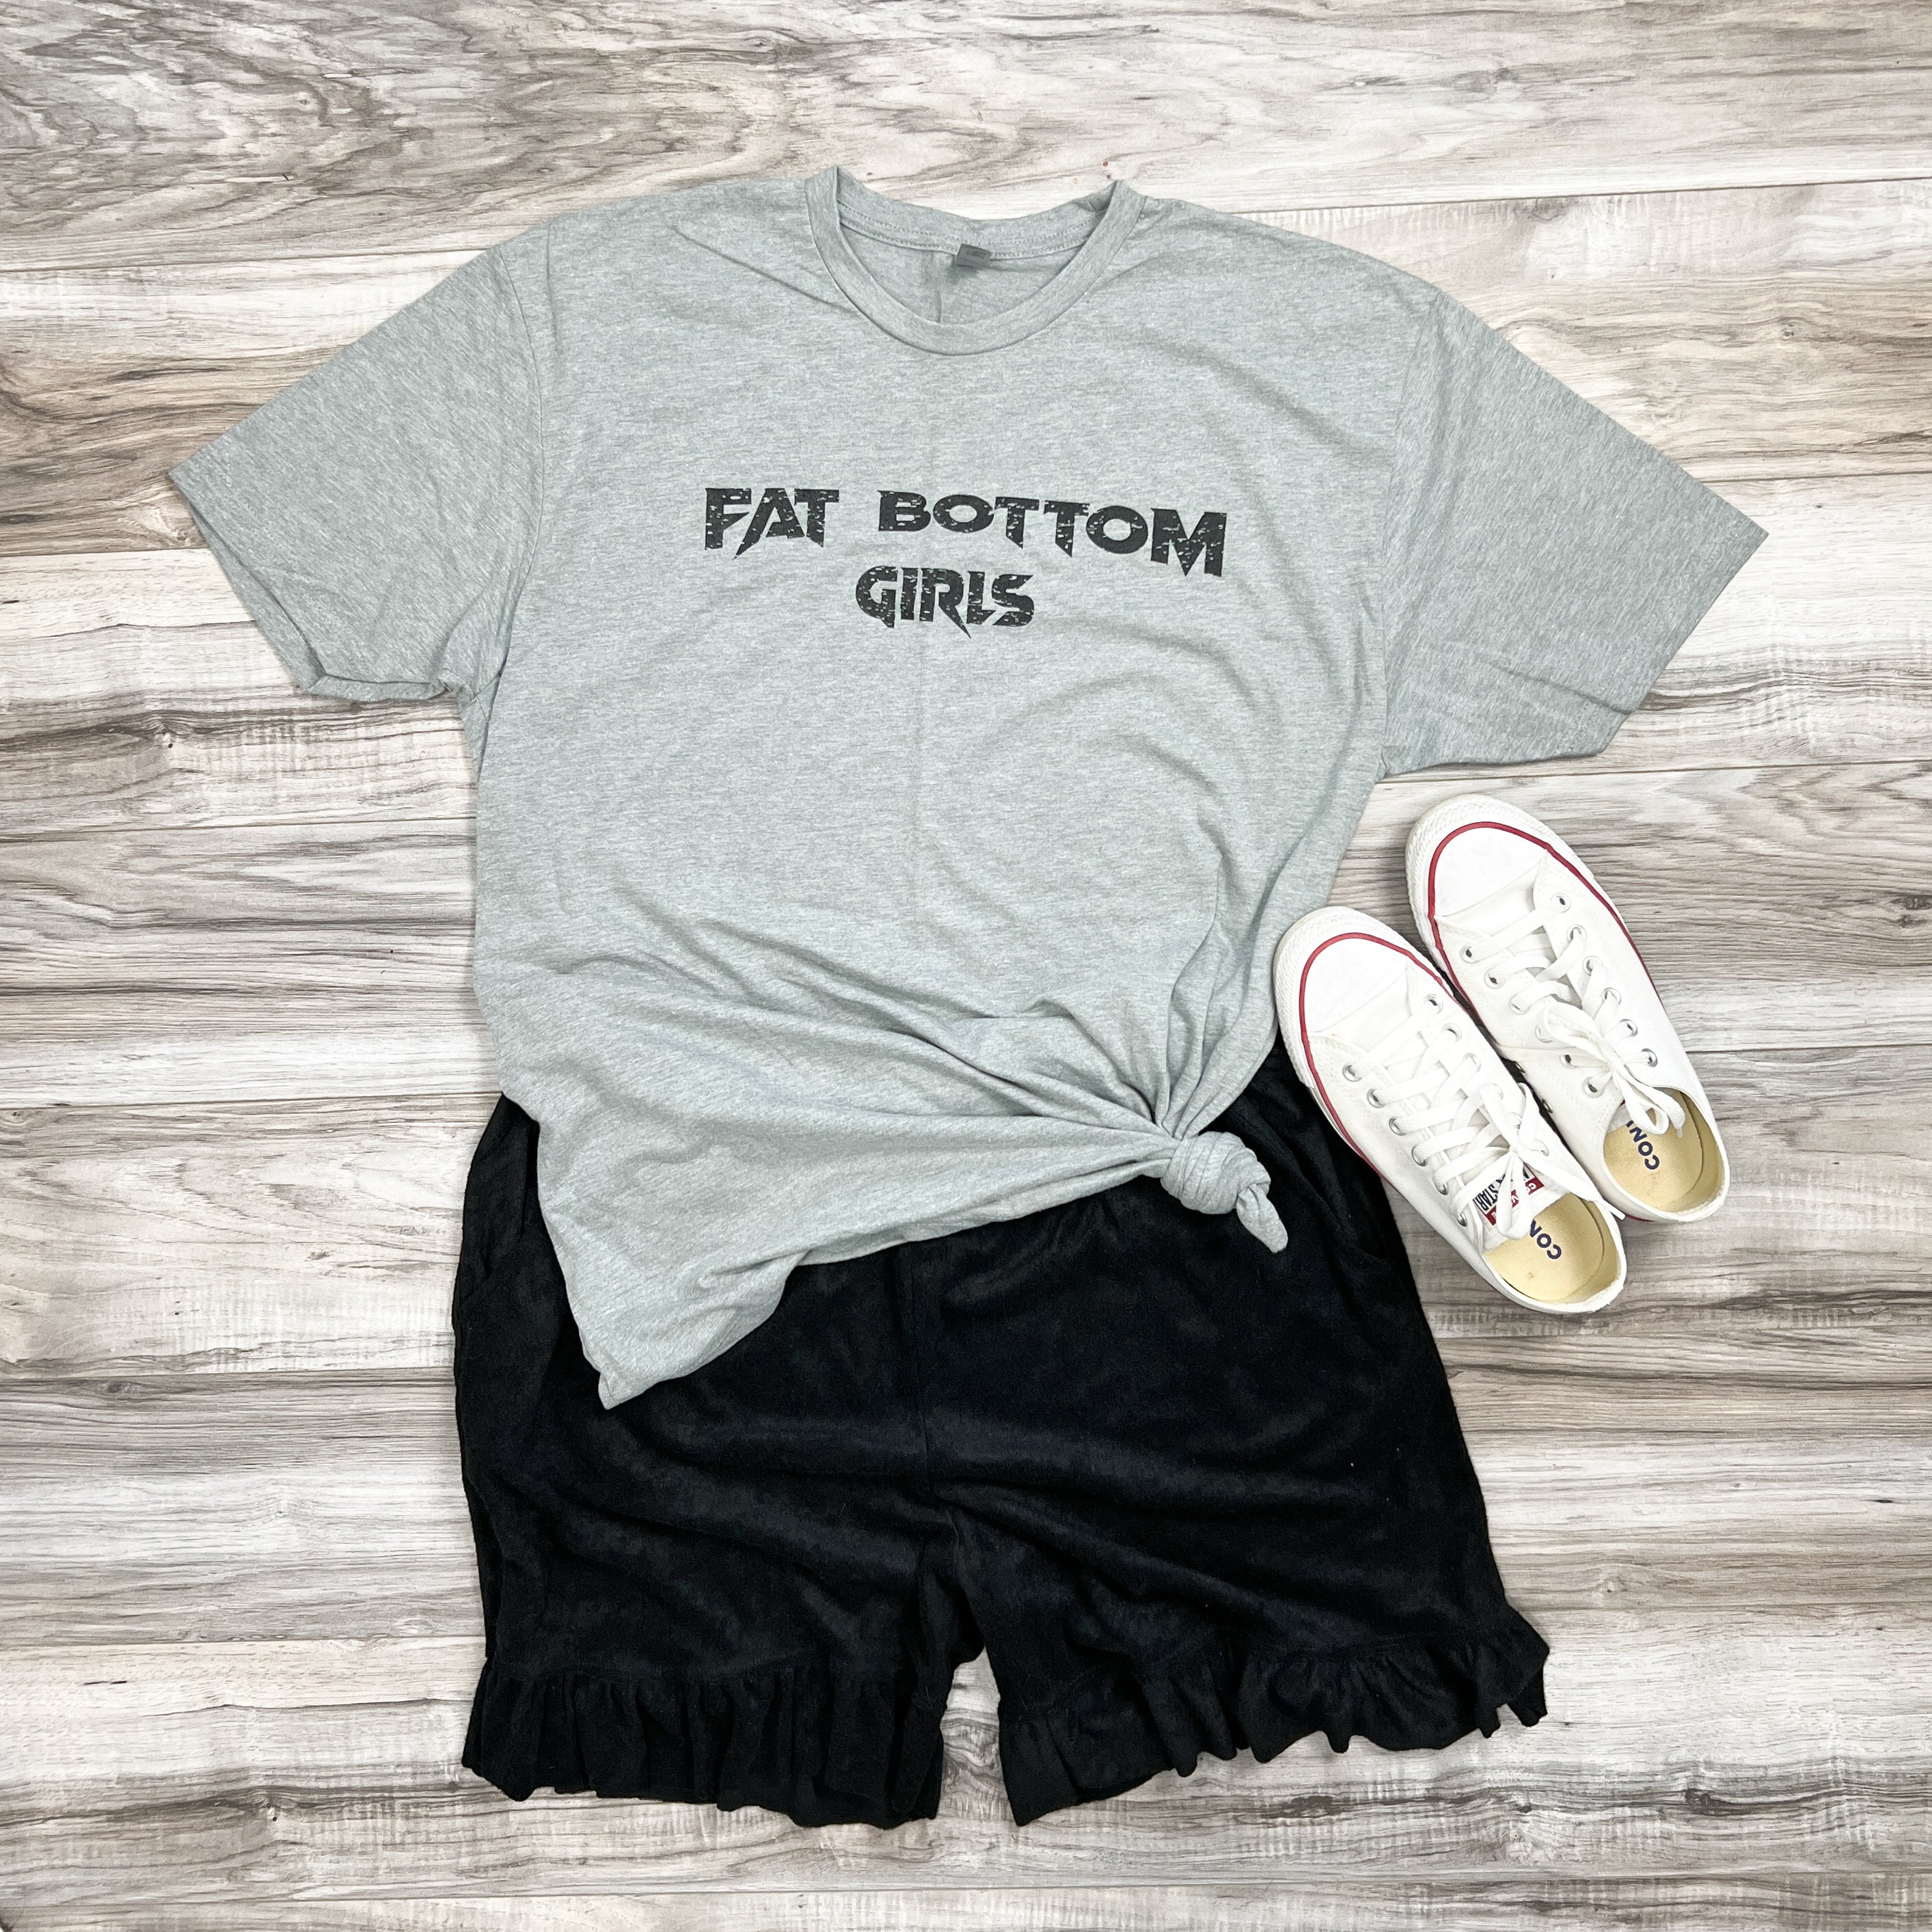 Fat Bottom Girls Tee